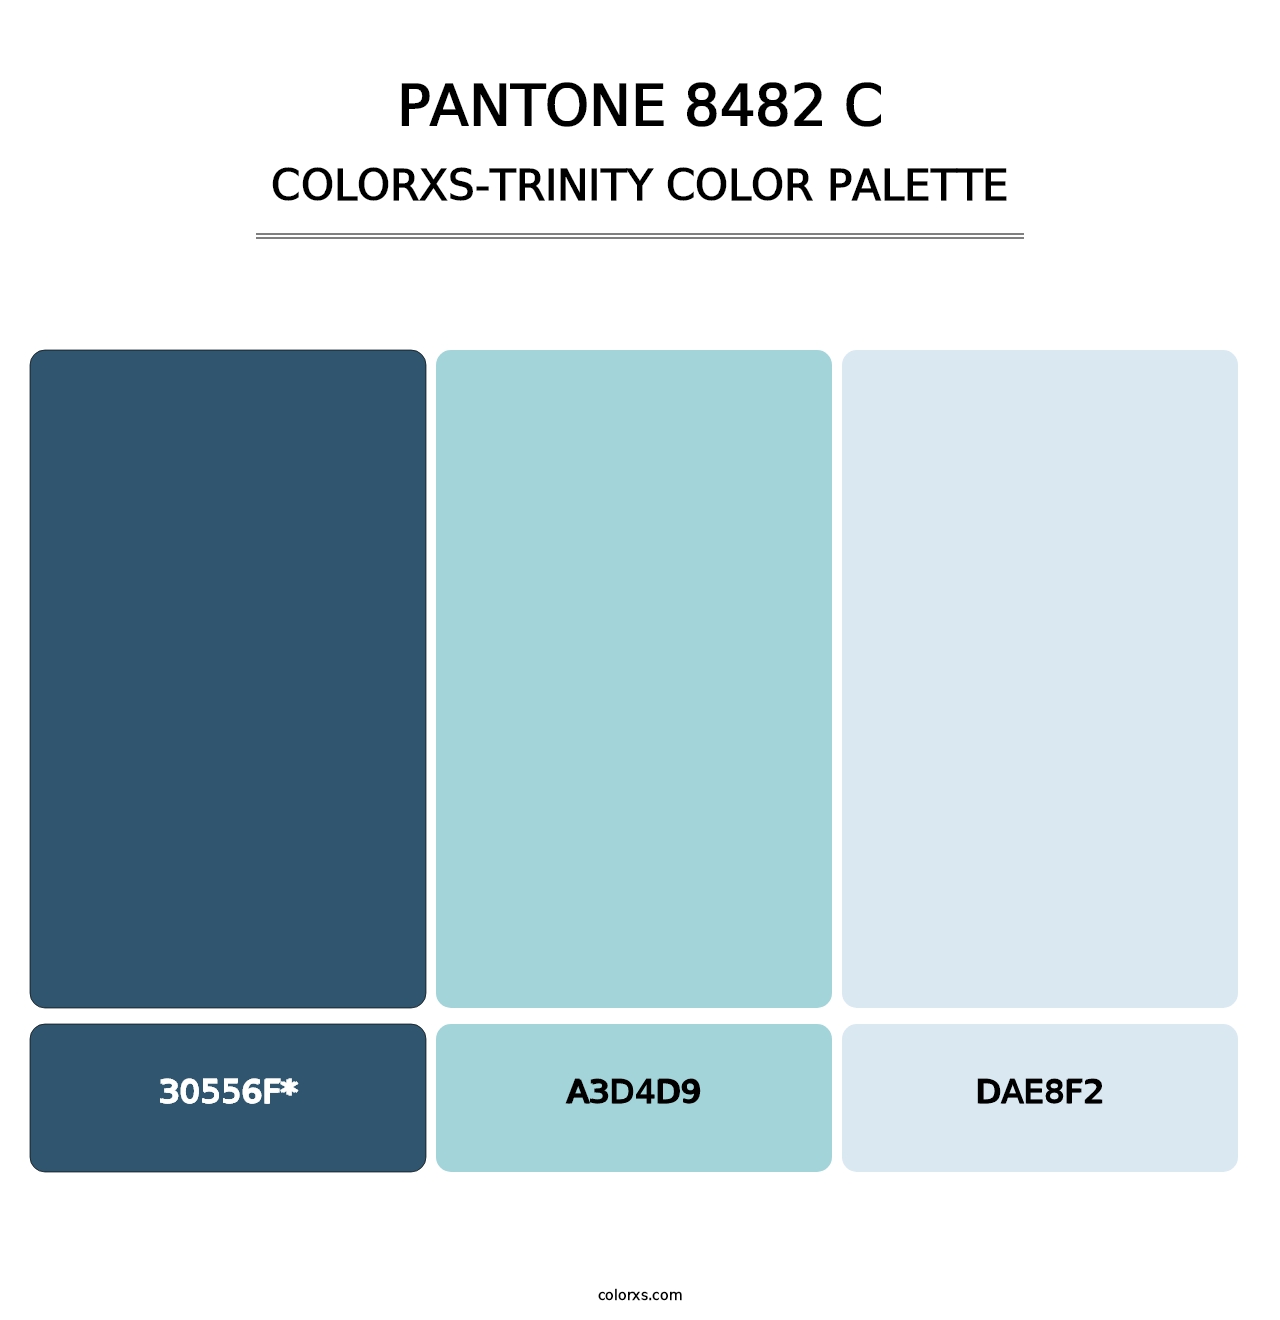 PANTONE 8482 C - Colorxs Trinity Palette